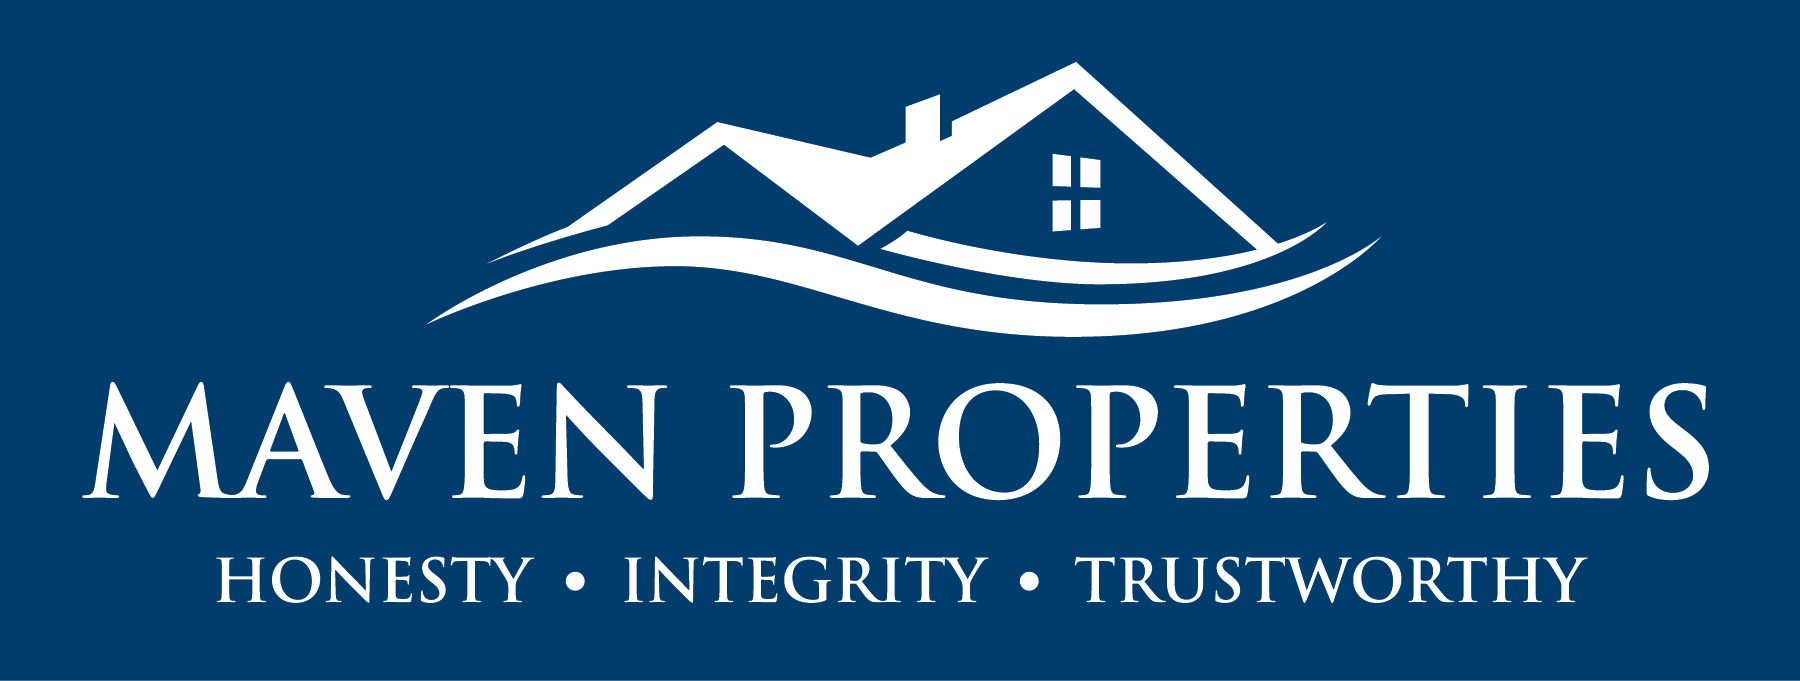 Maven Properties LLC logo